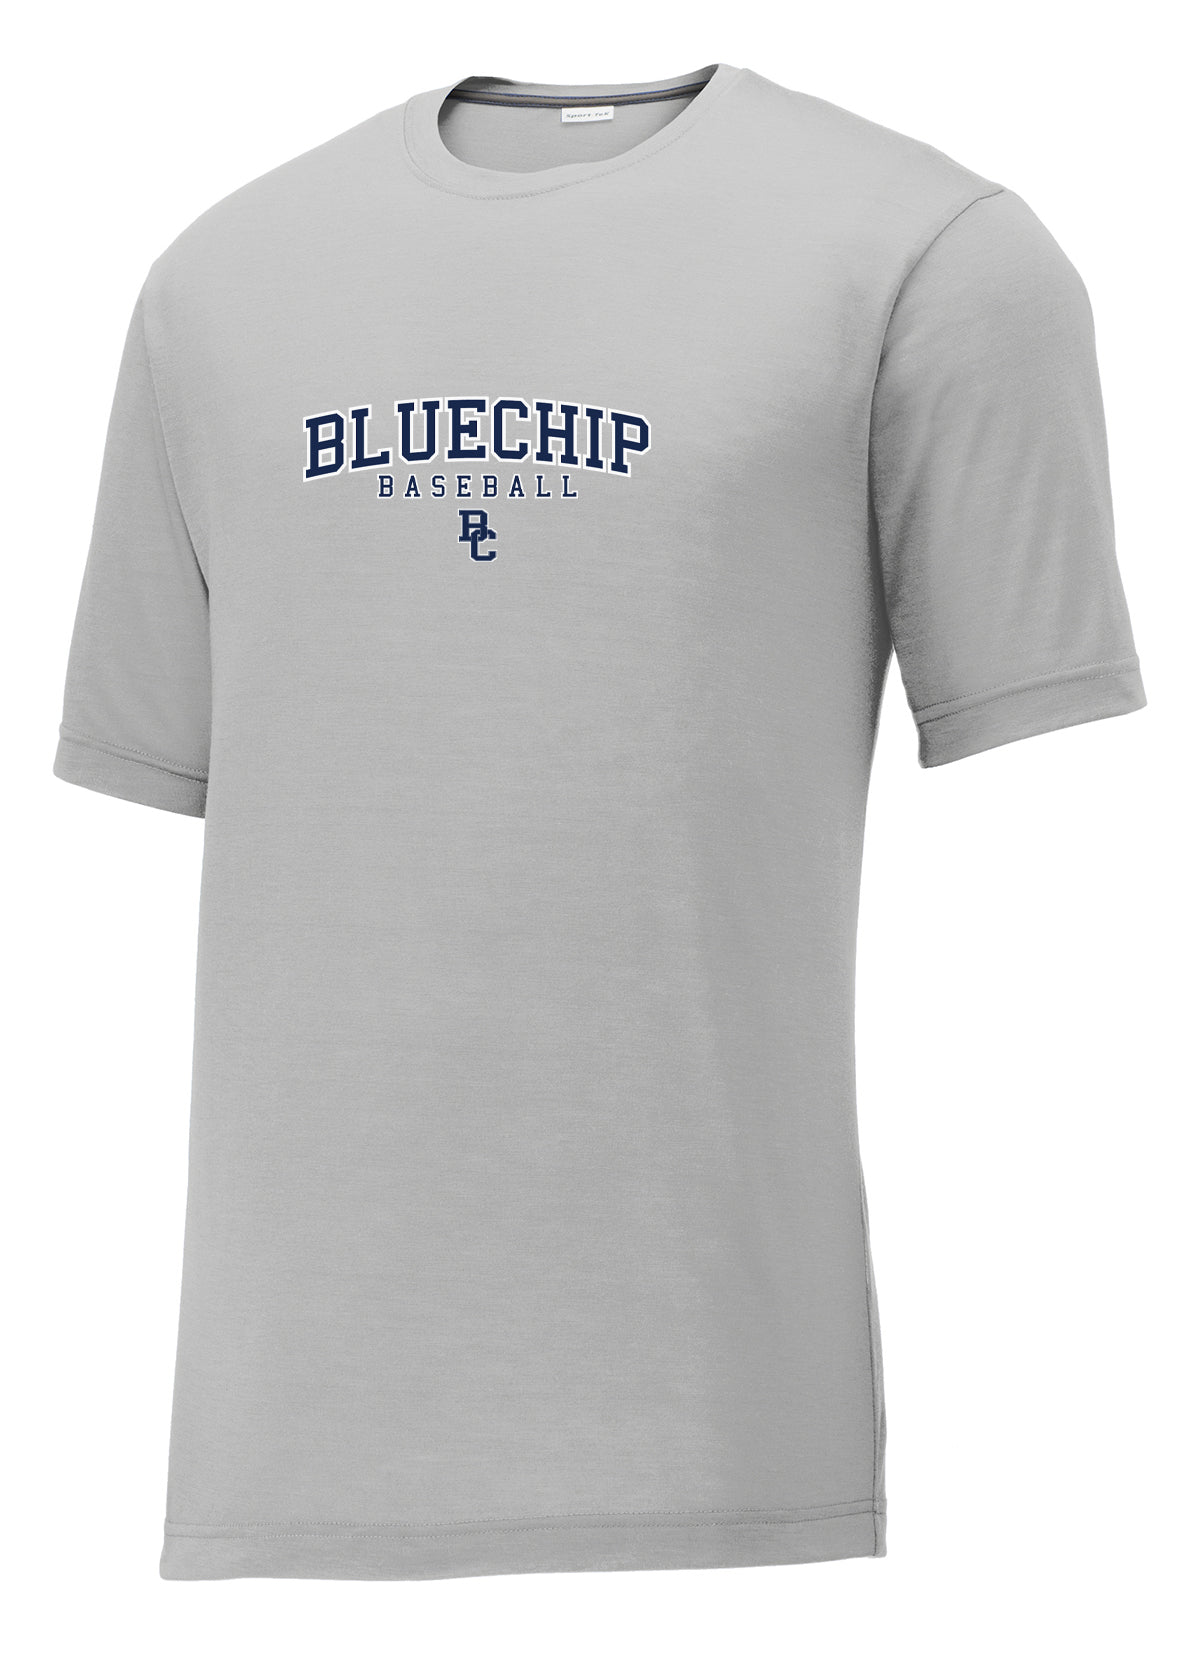 BlueChip Baseball CottonTouch Performance T-Shirt